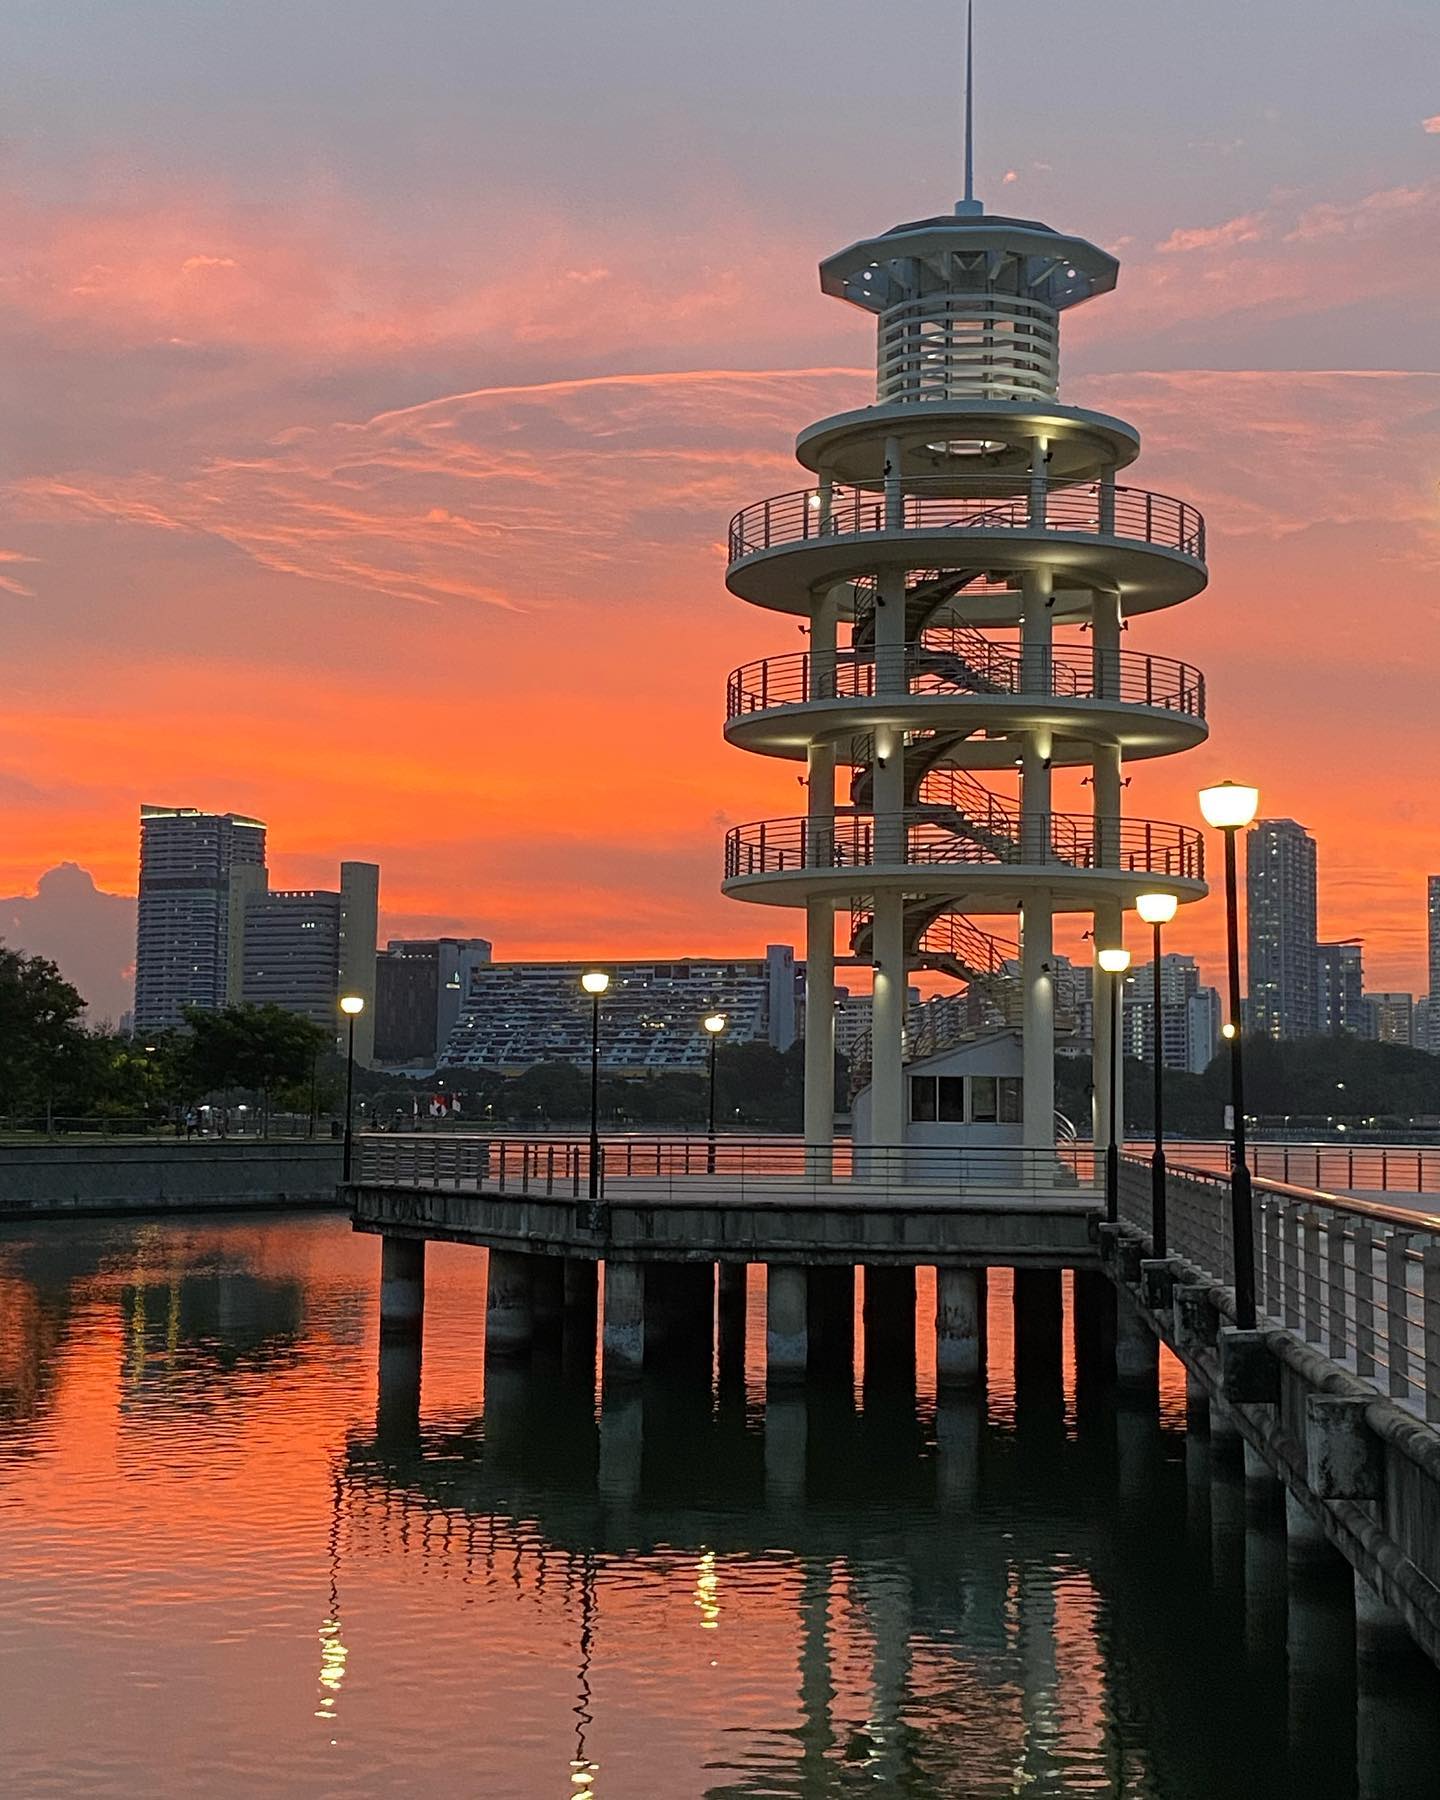 Sunrise & sunset spots in Singapore - Tanjong Rhu lookout tower